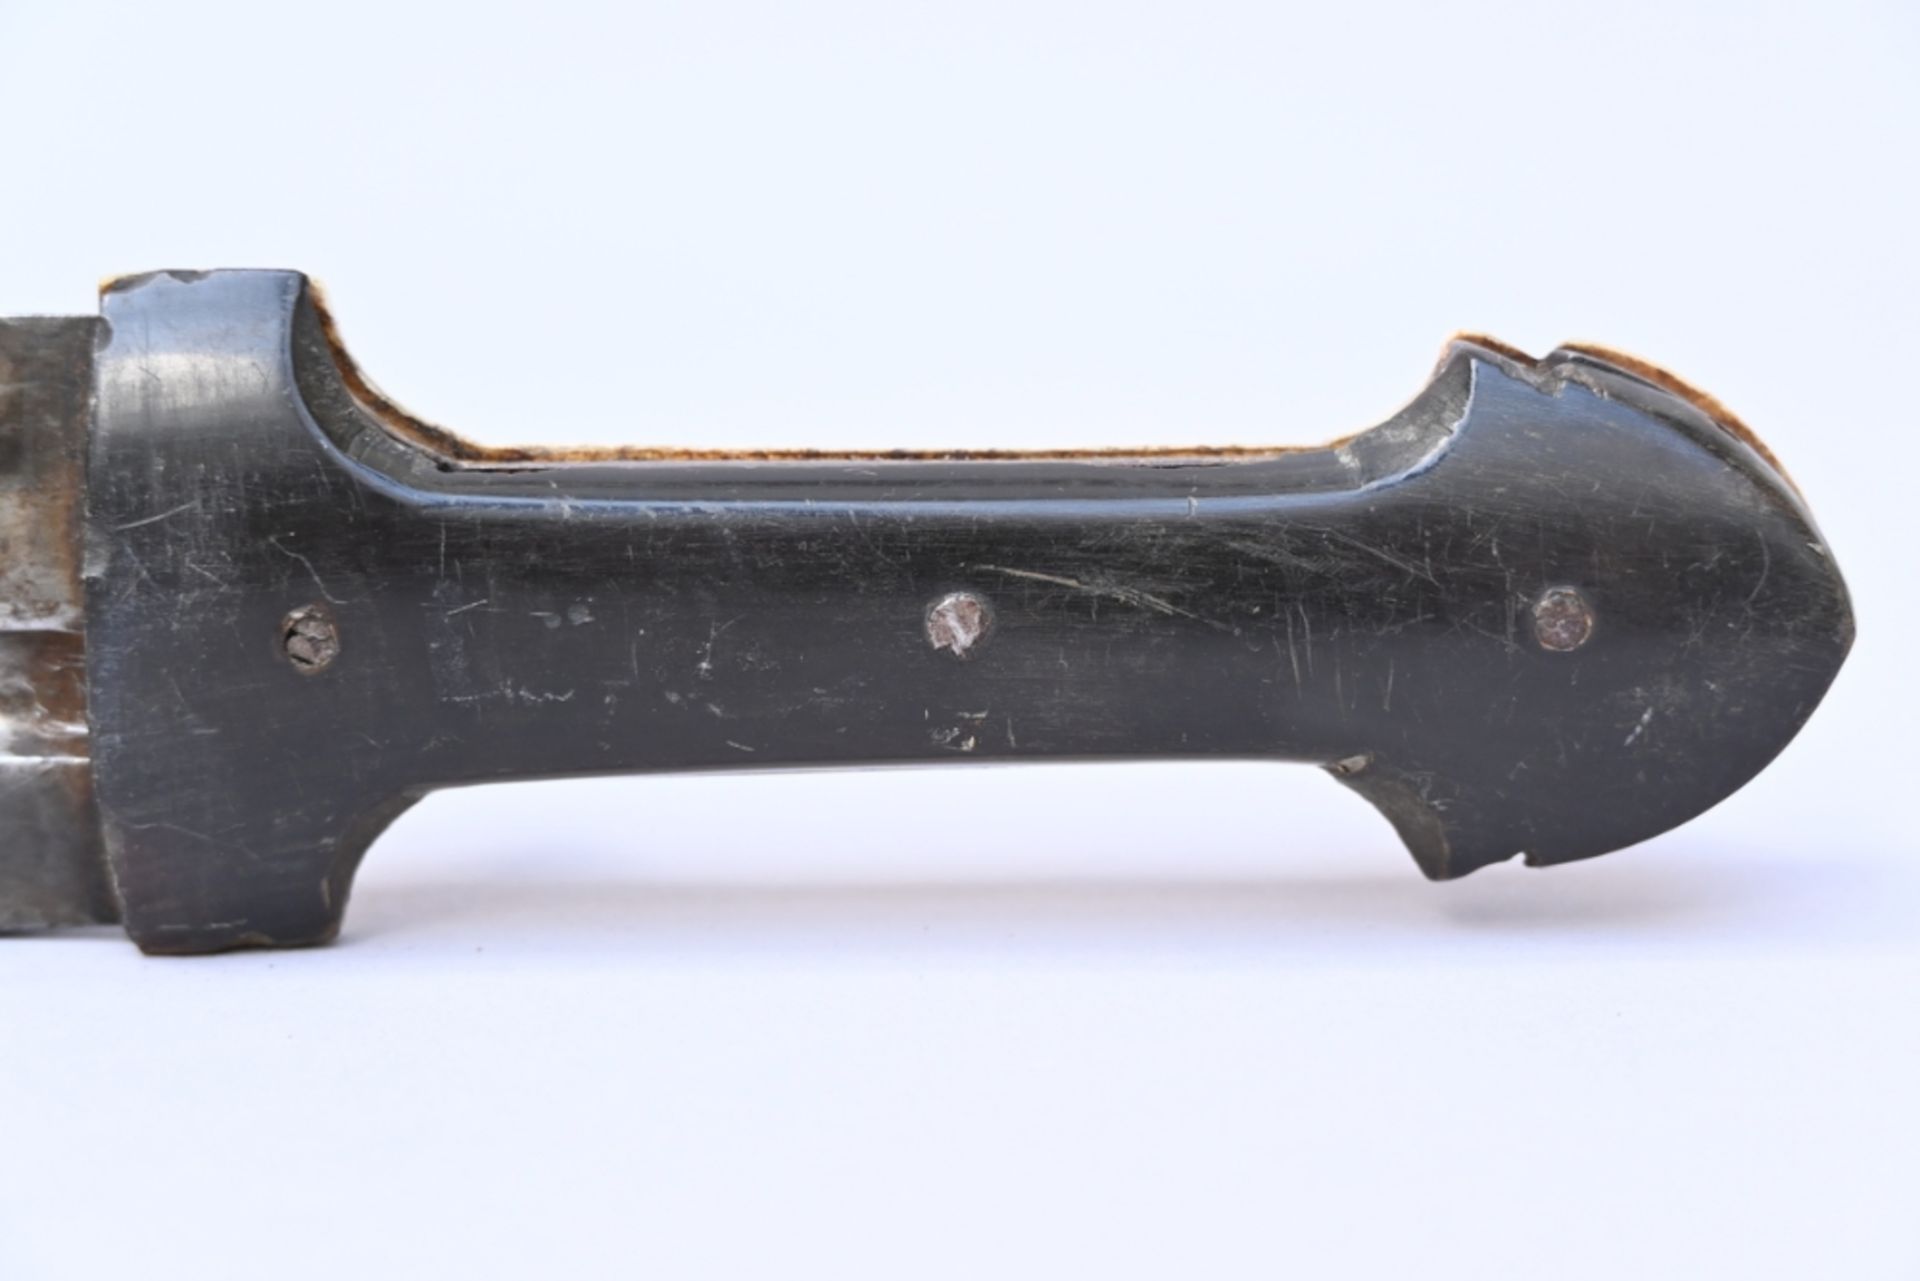 Kindjal dagger with gilt decoration, 19th century (l 51.5 cm) - Image 5 of 5